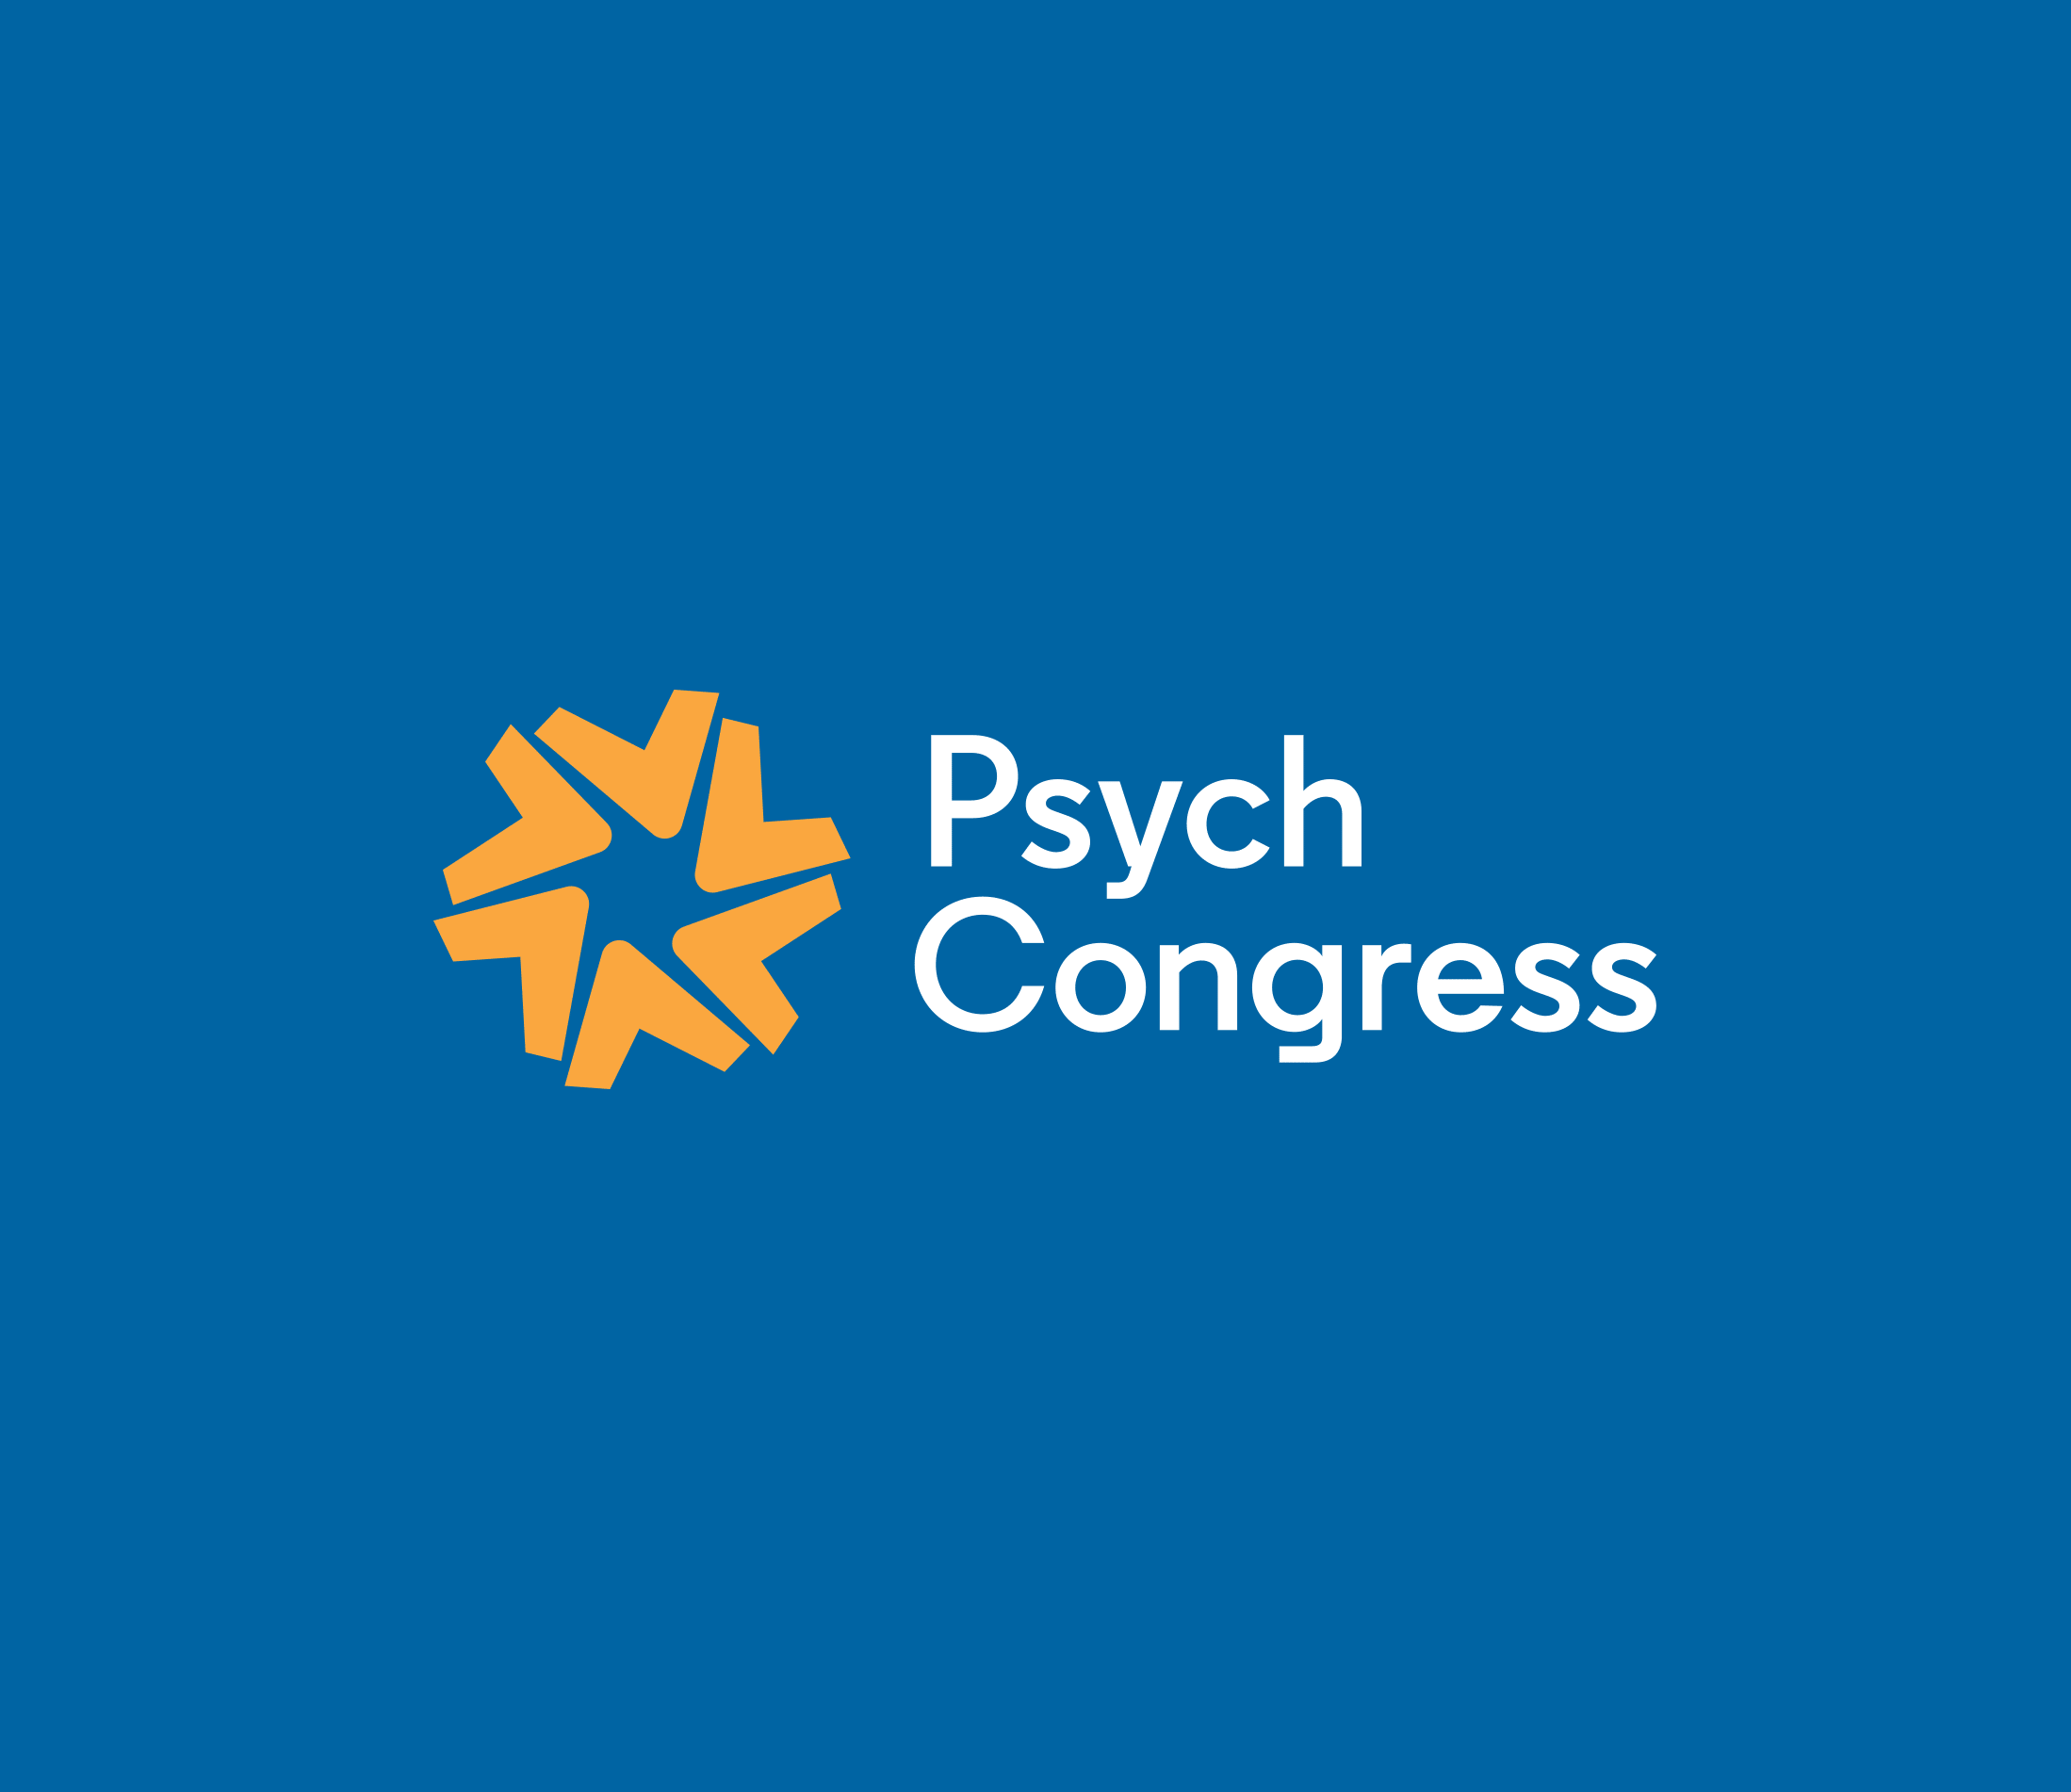 Psych Congress